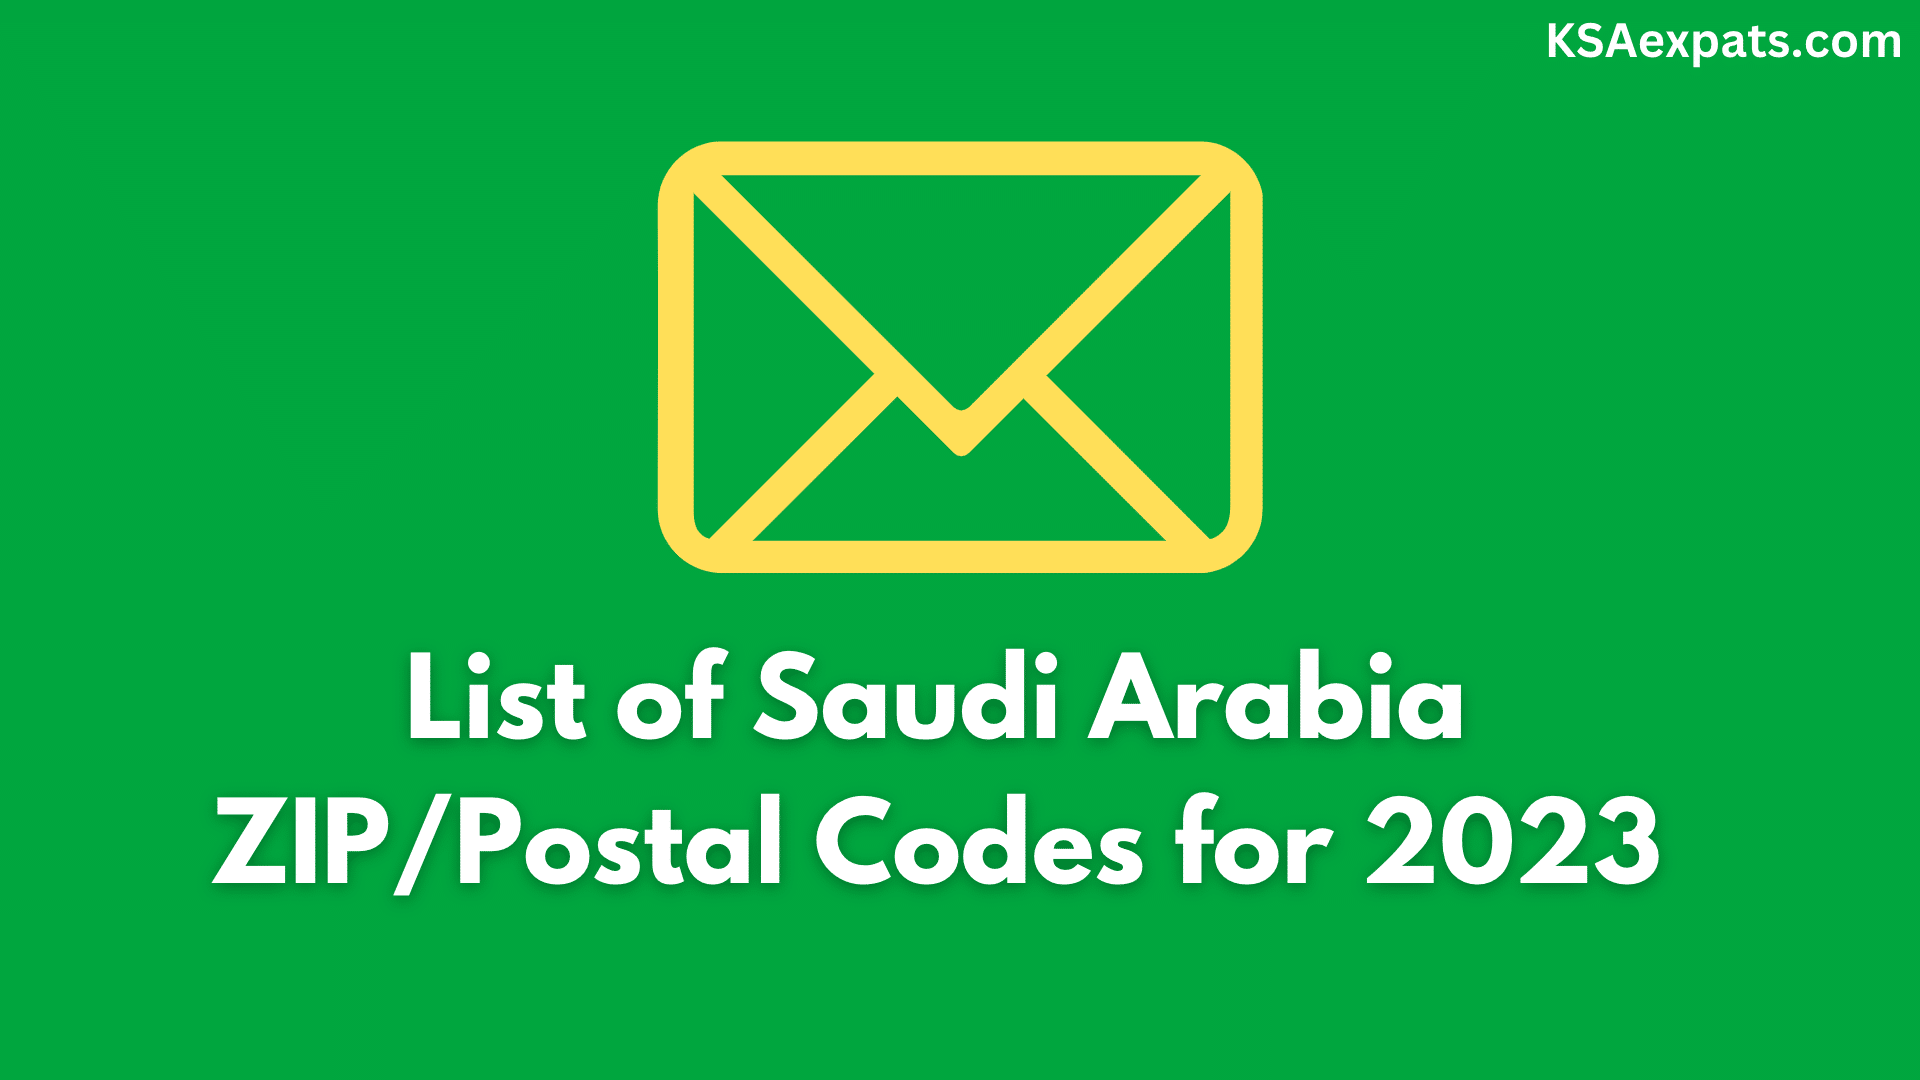 List of Saudi Arabia ZIP/Postal Codes for 2023